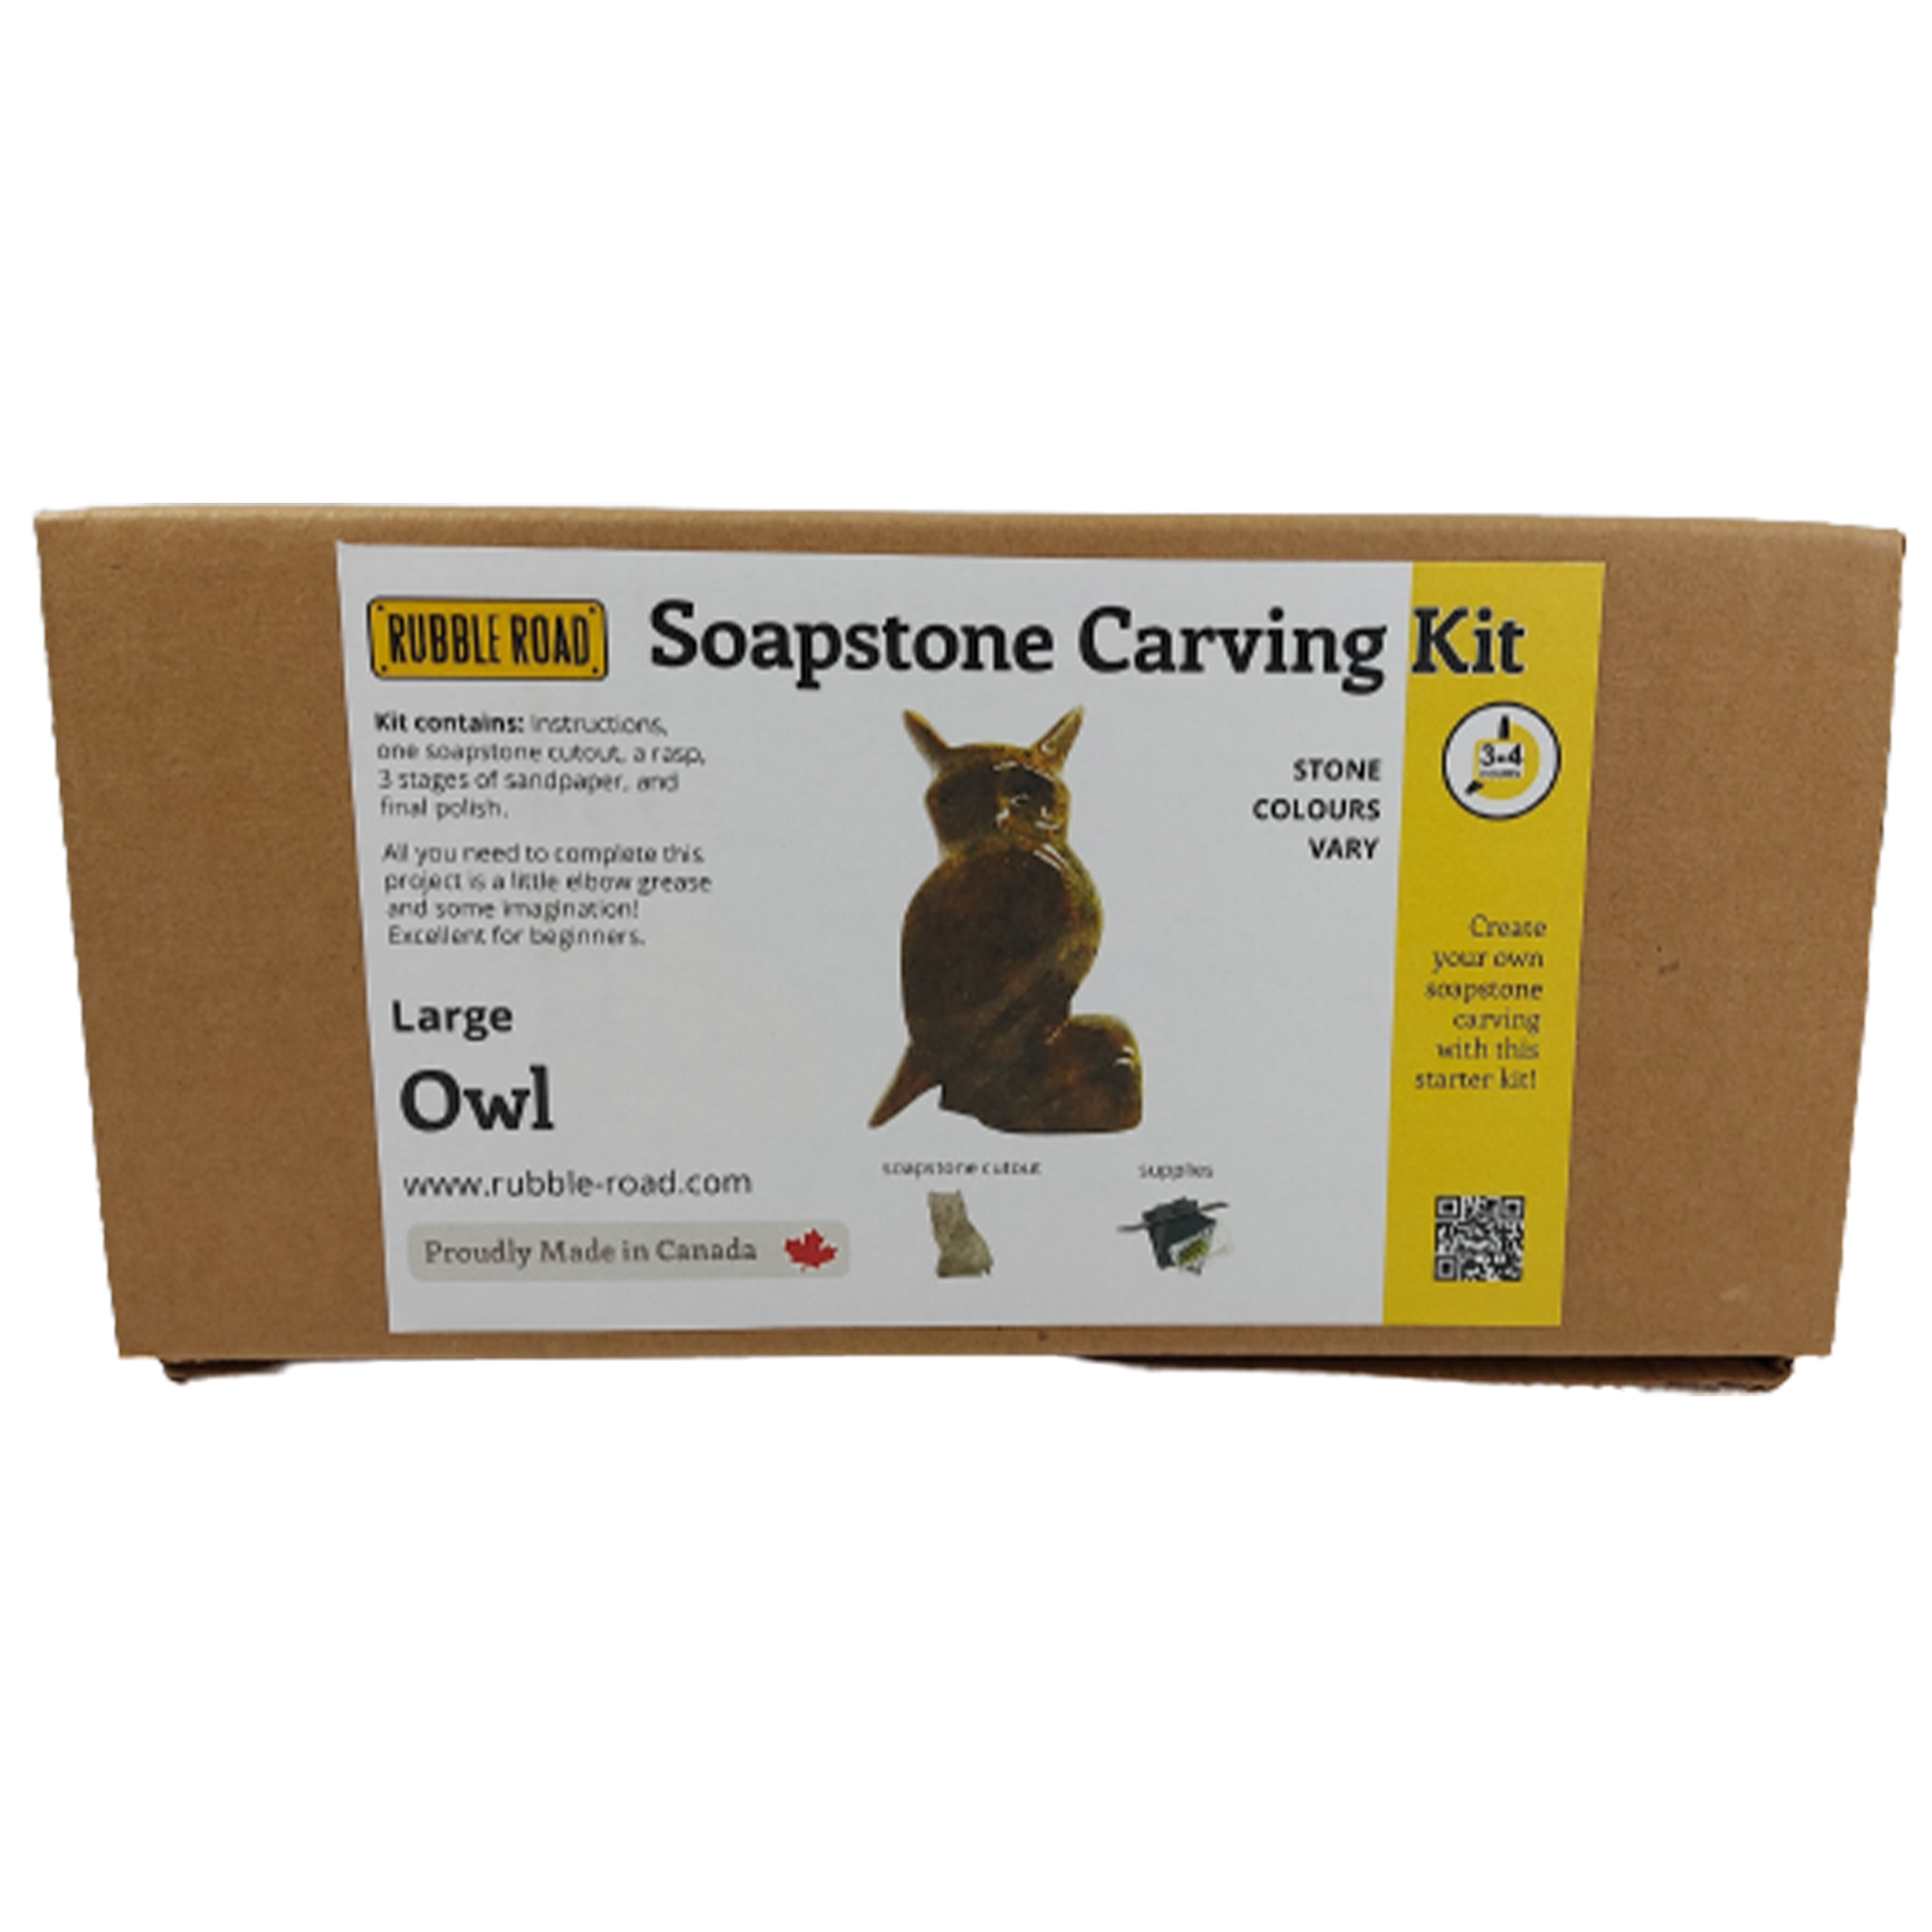 Soapstone Carving Kit, Large